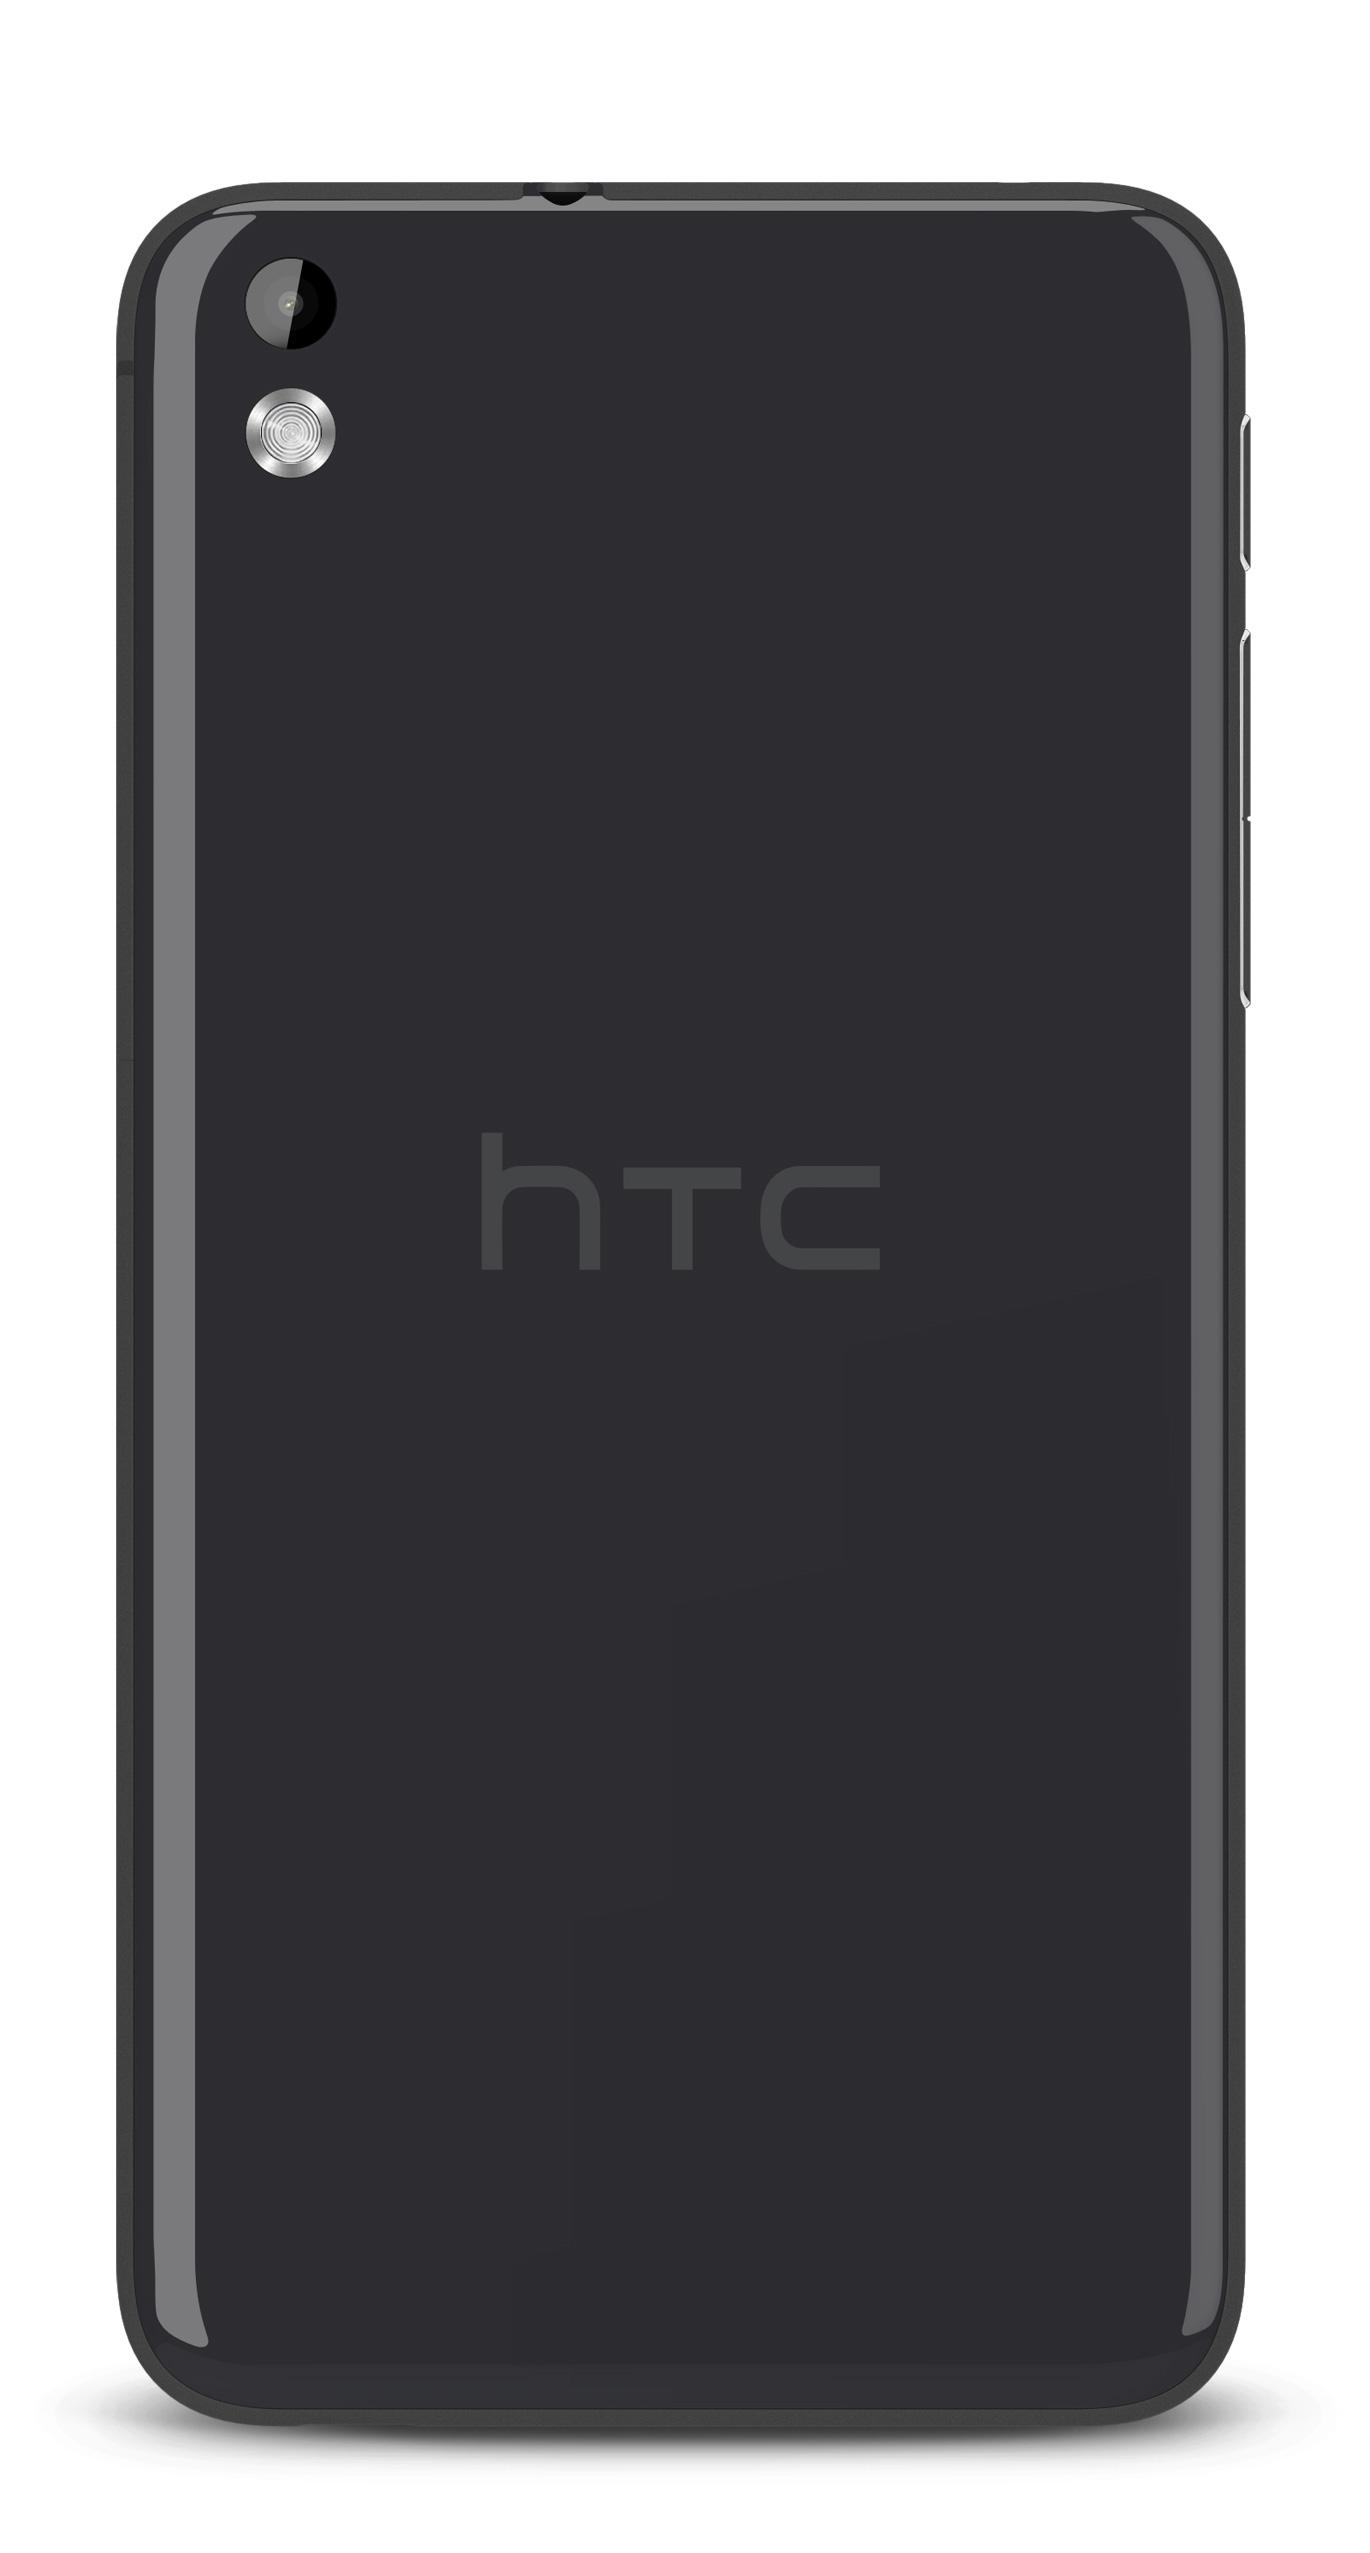 HTC Desire 816 gray